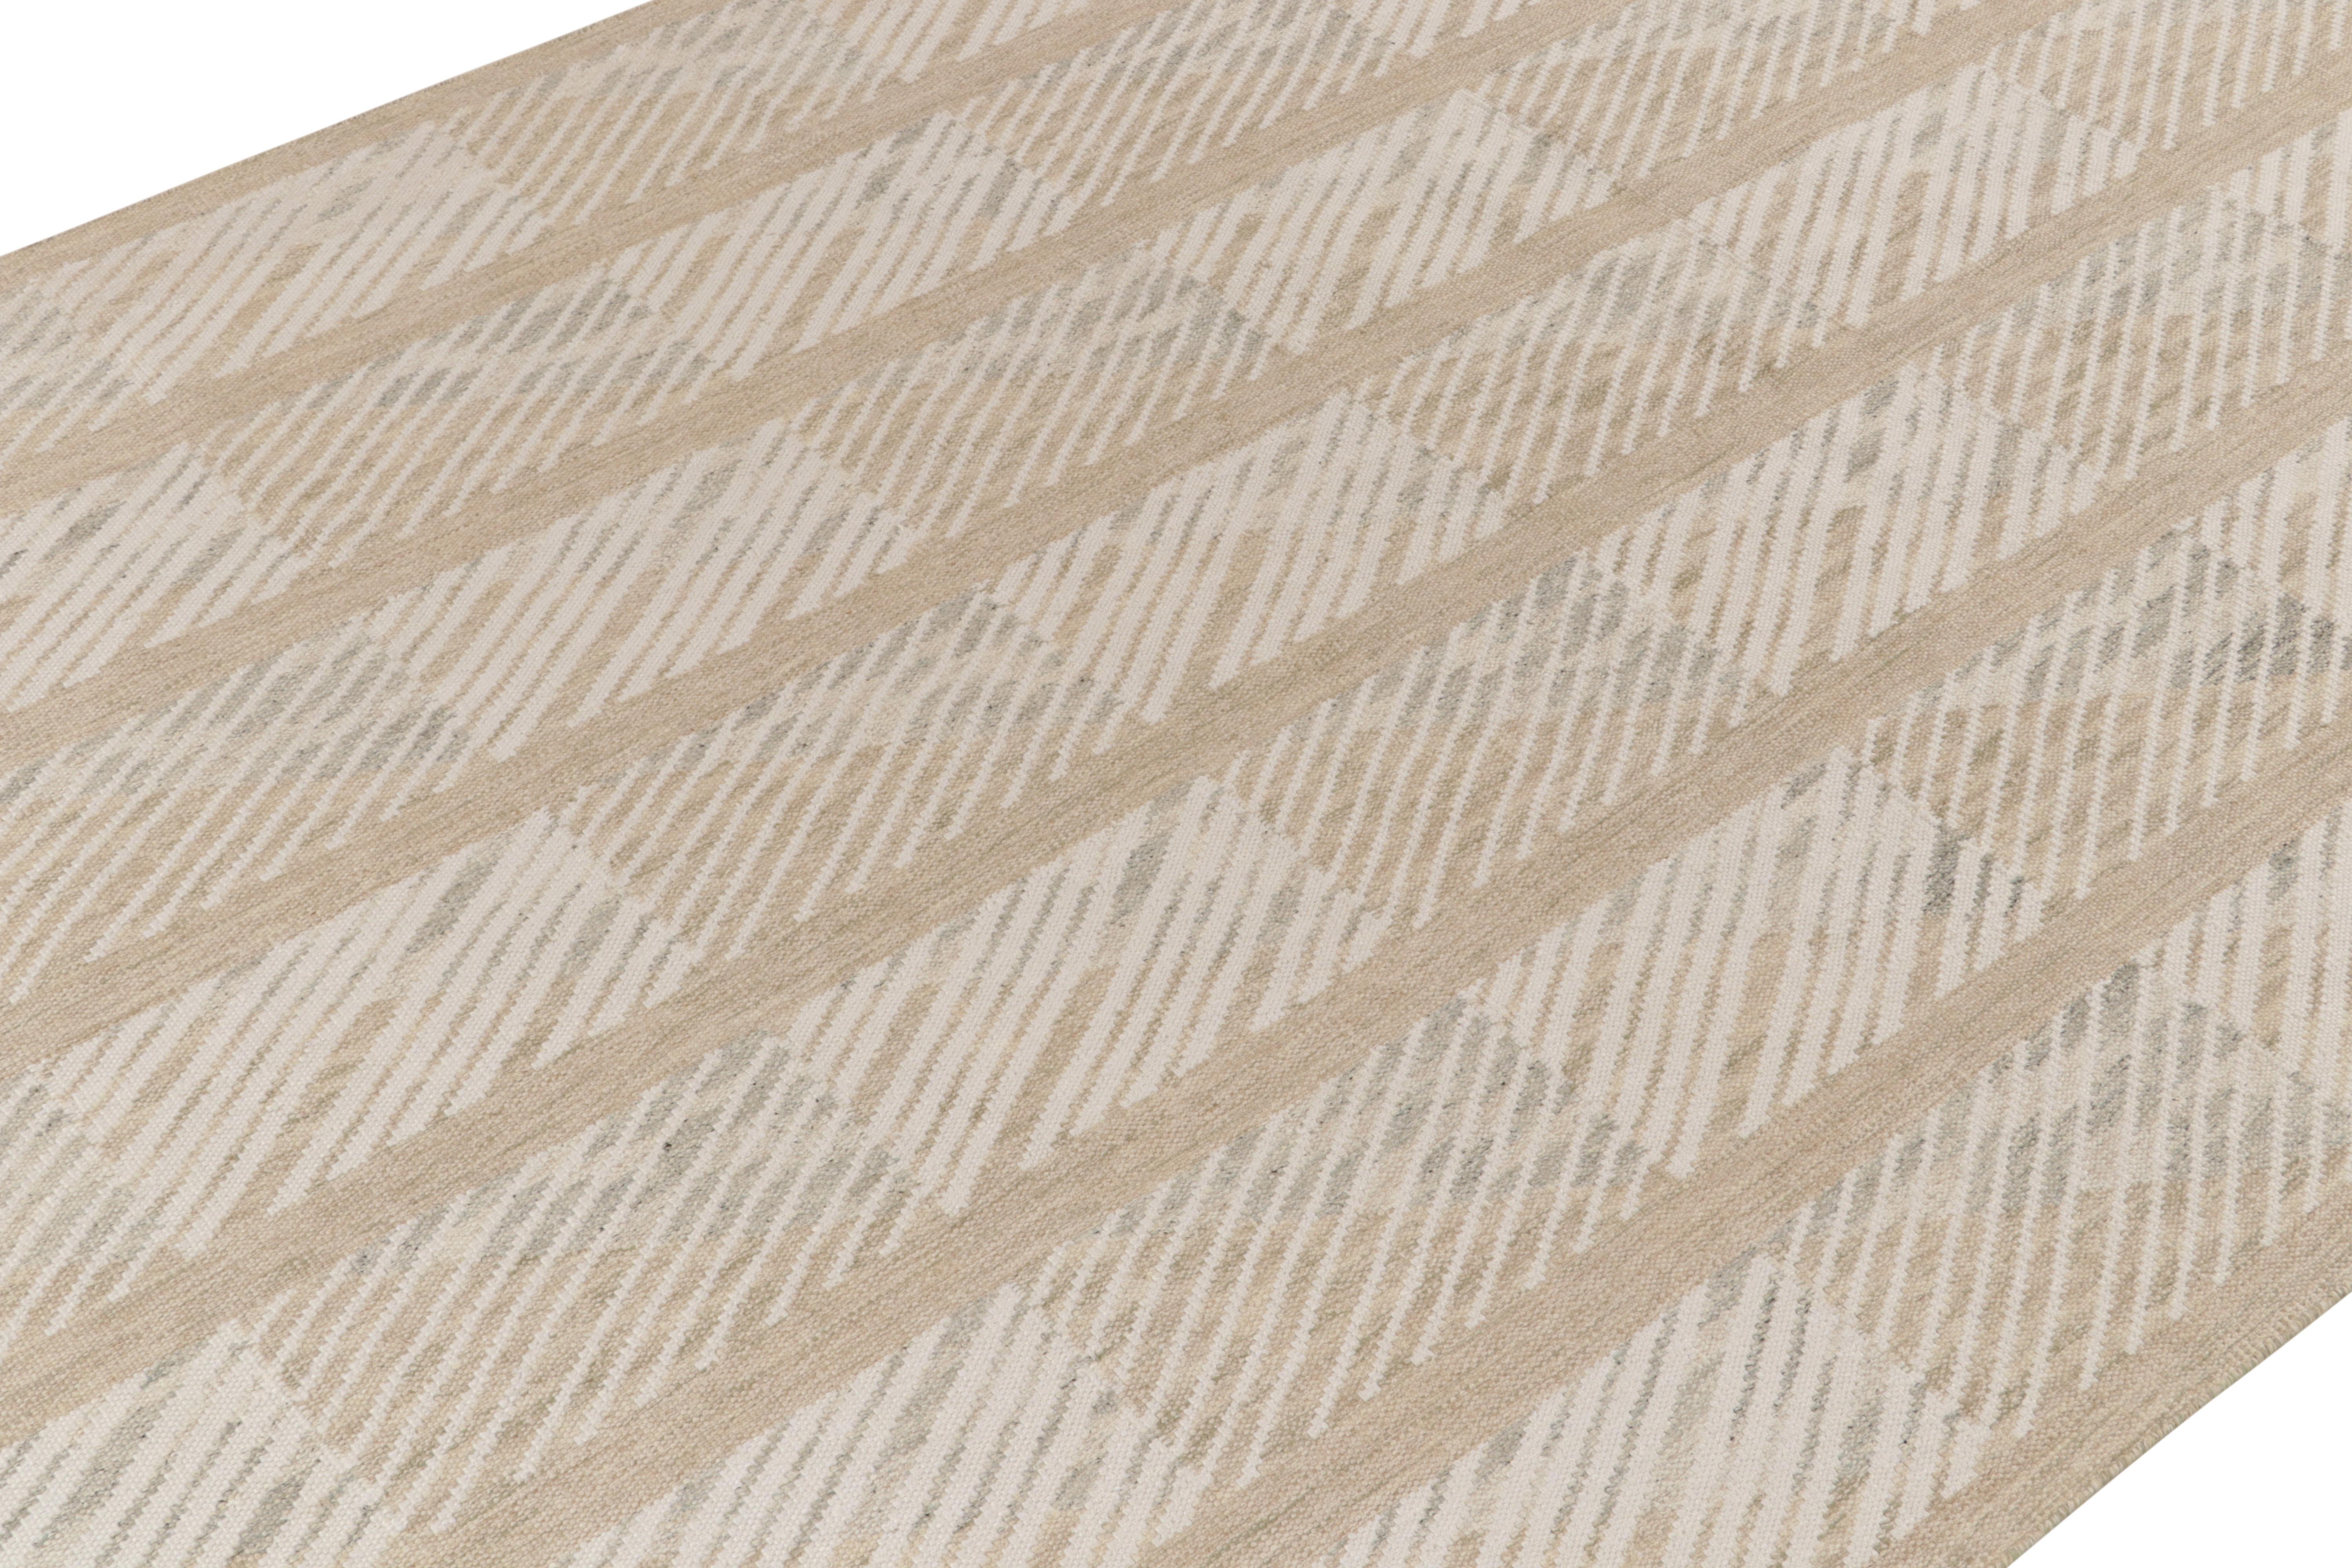 Indian Rug & Kilim's Scandinavian Style Kilim Rug in White Beige Geometric Pattern For Sale